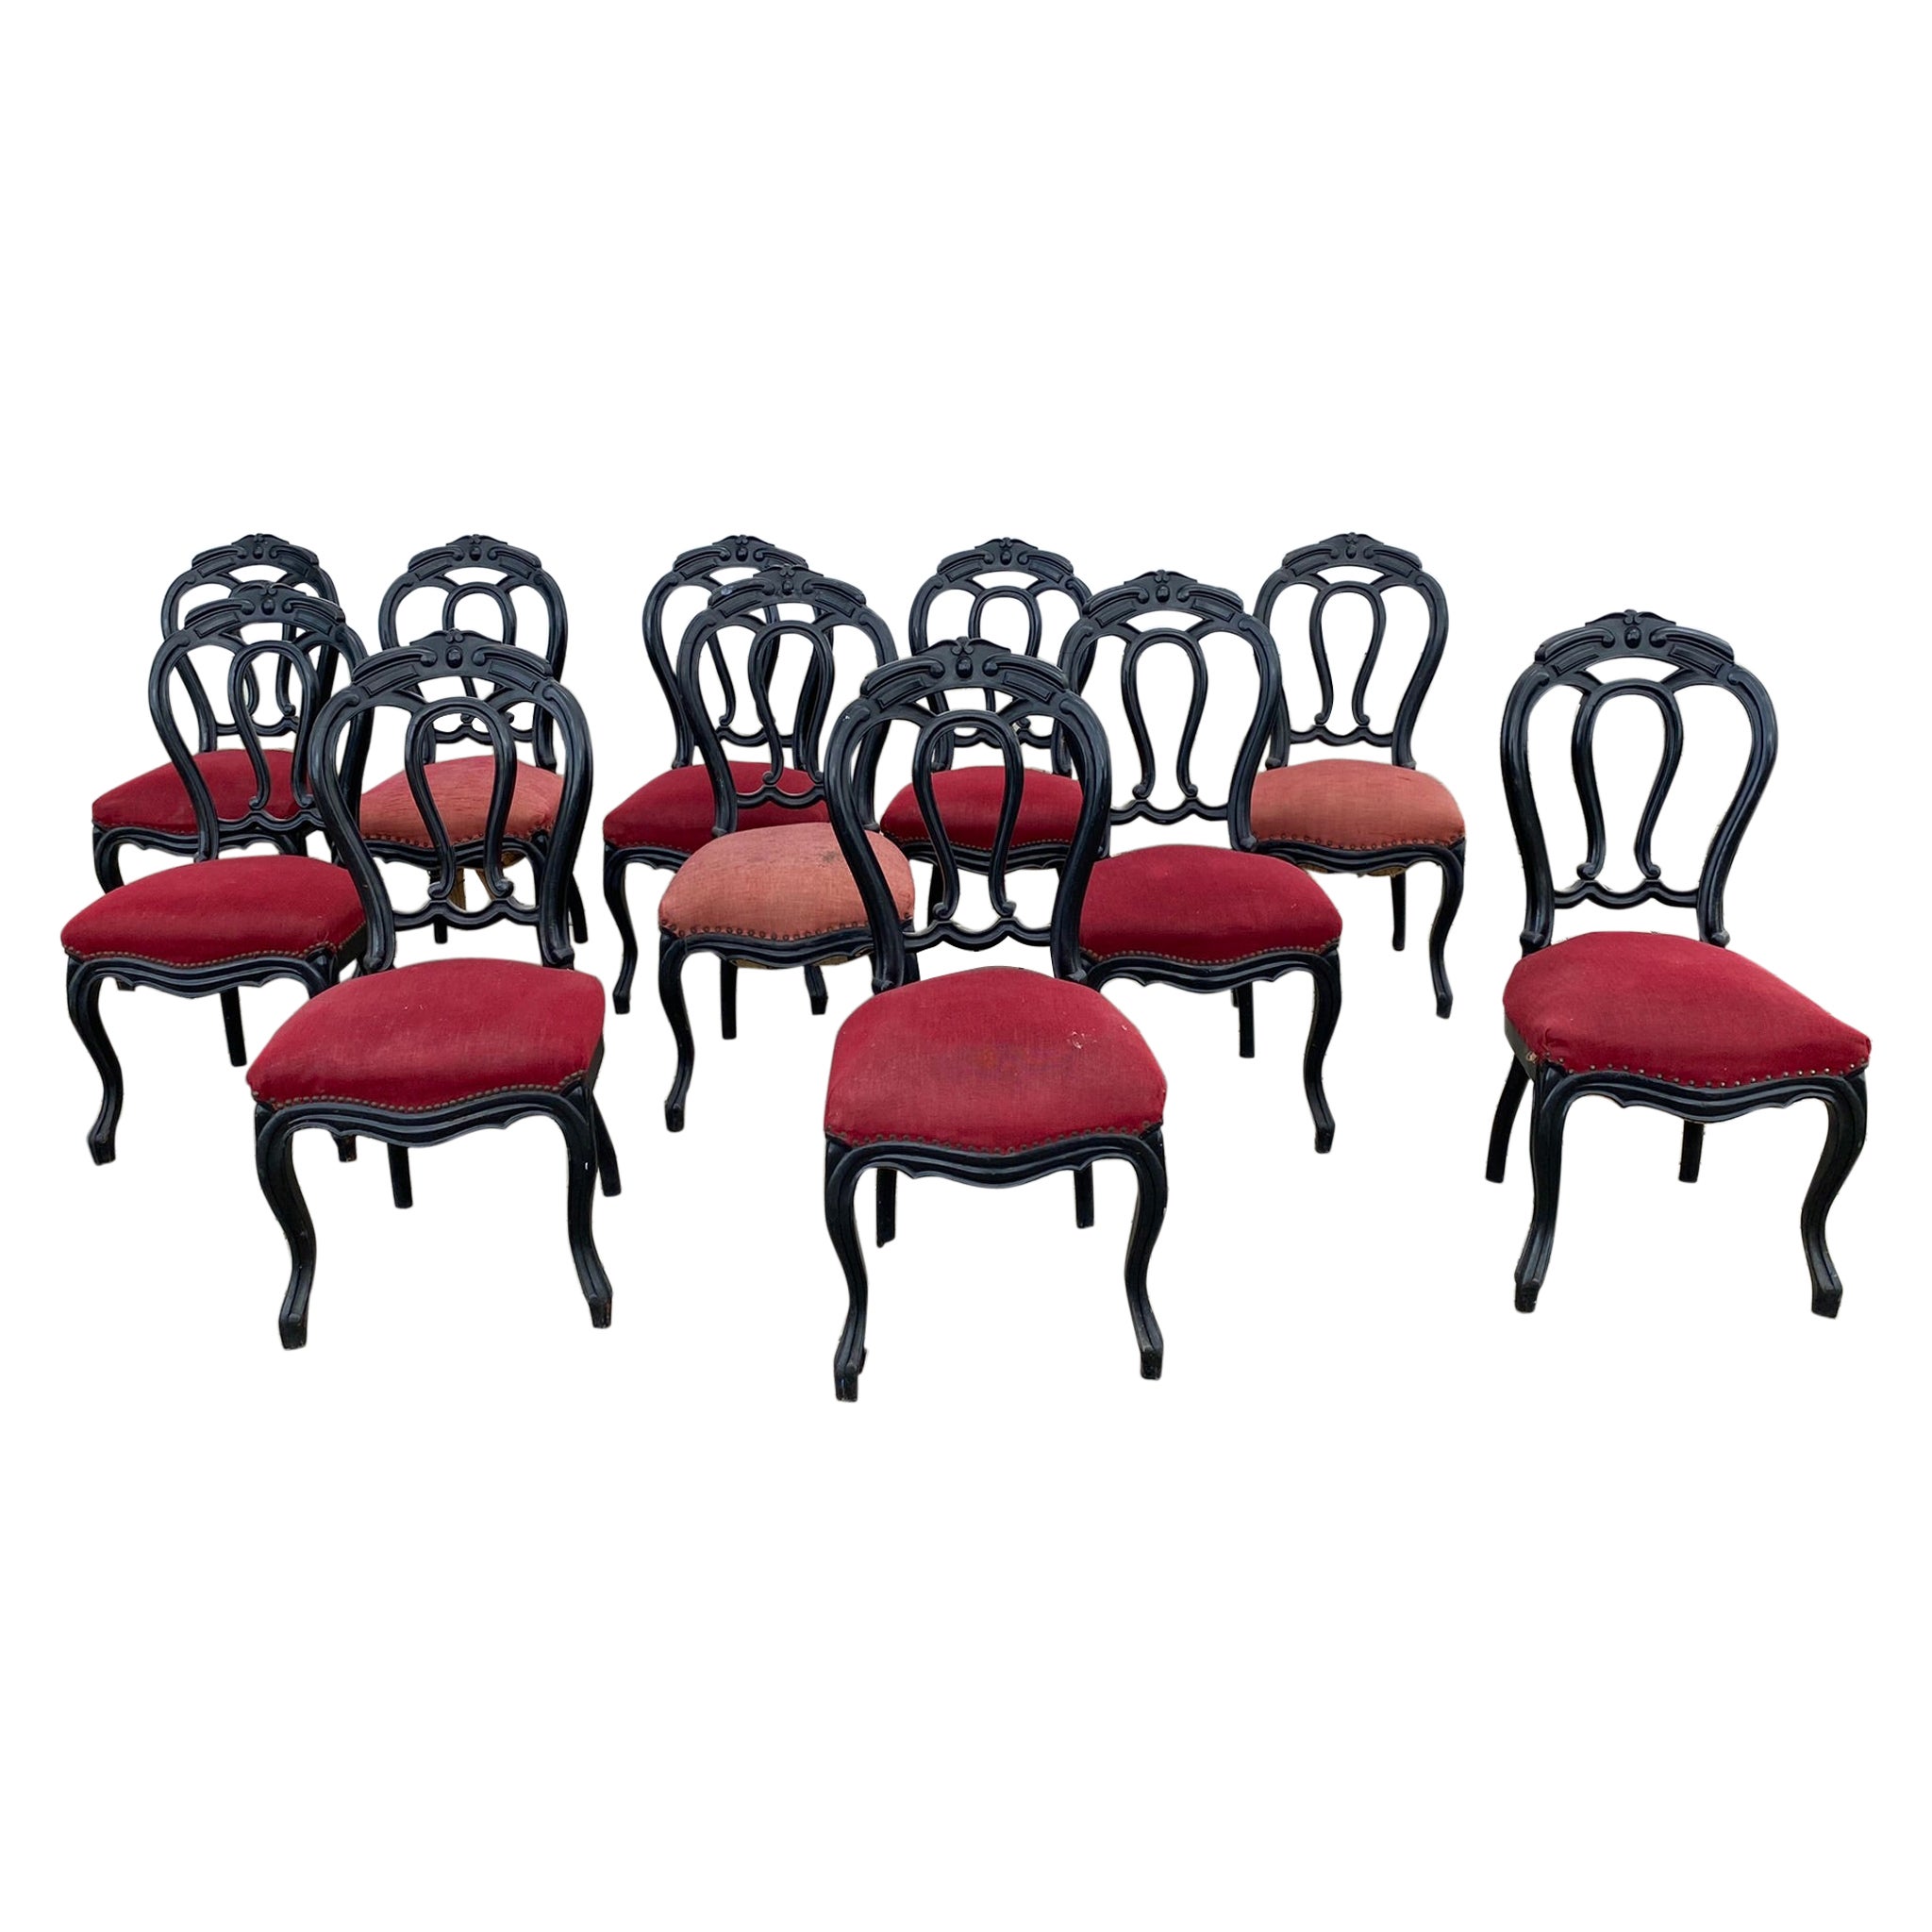 Rare ensemble de 9 chaises d'époque Napoléon III en hêtre noirci